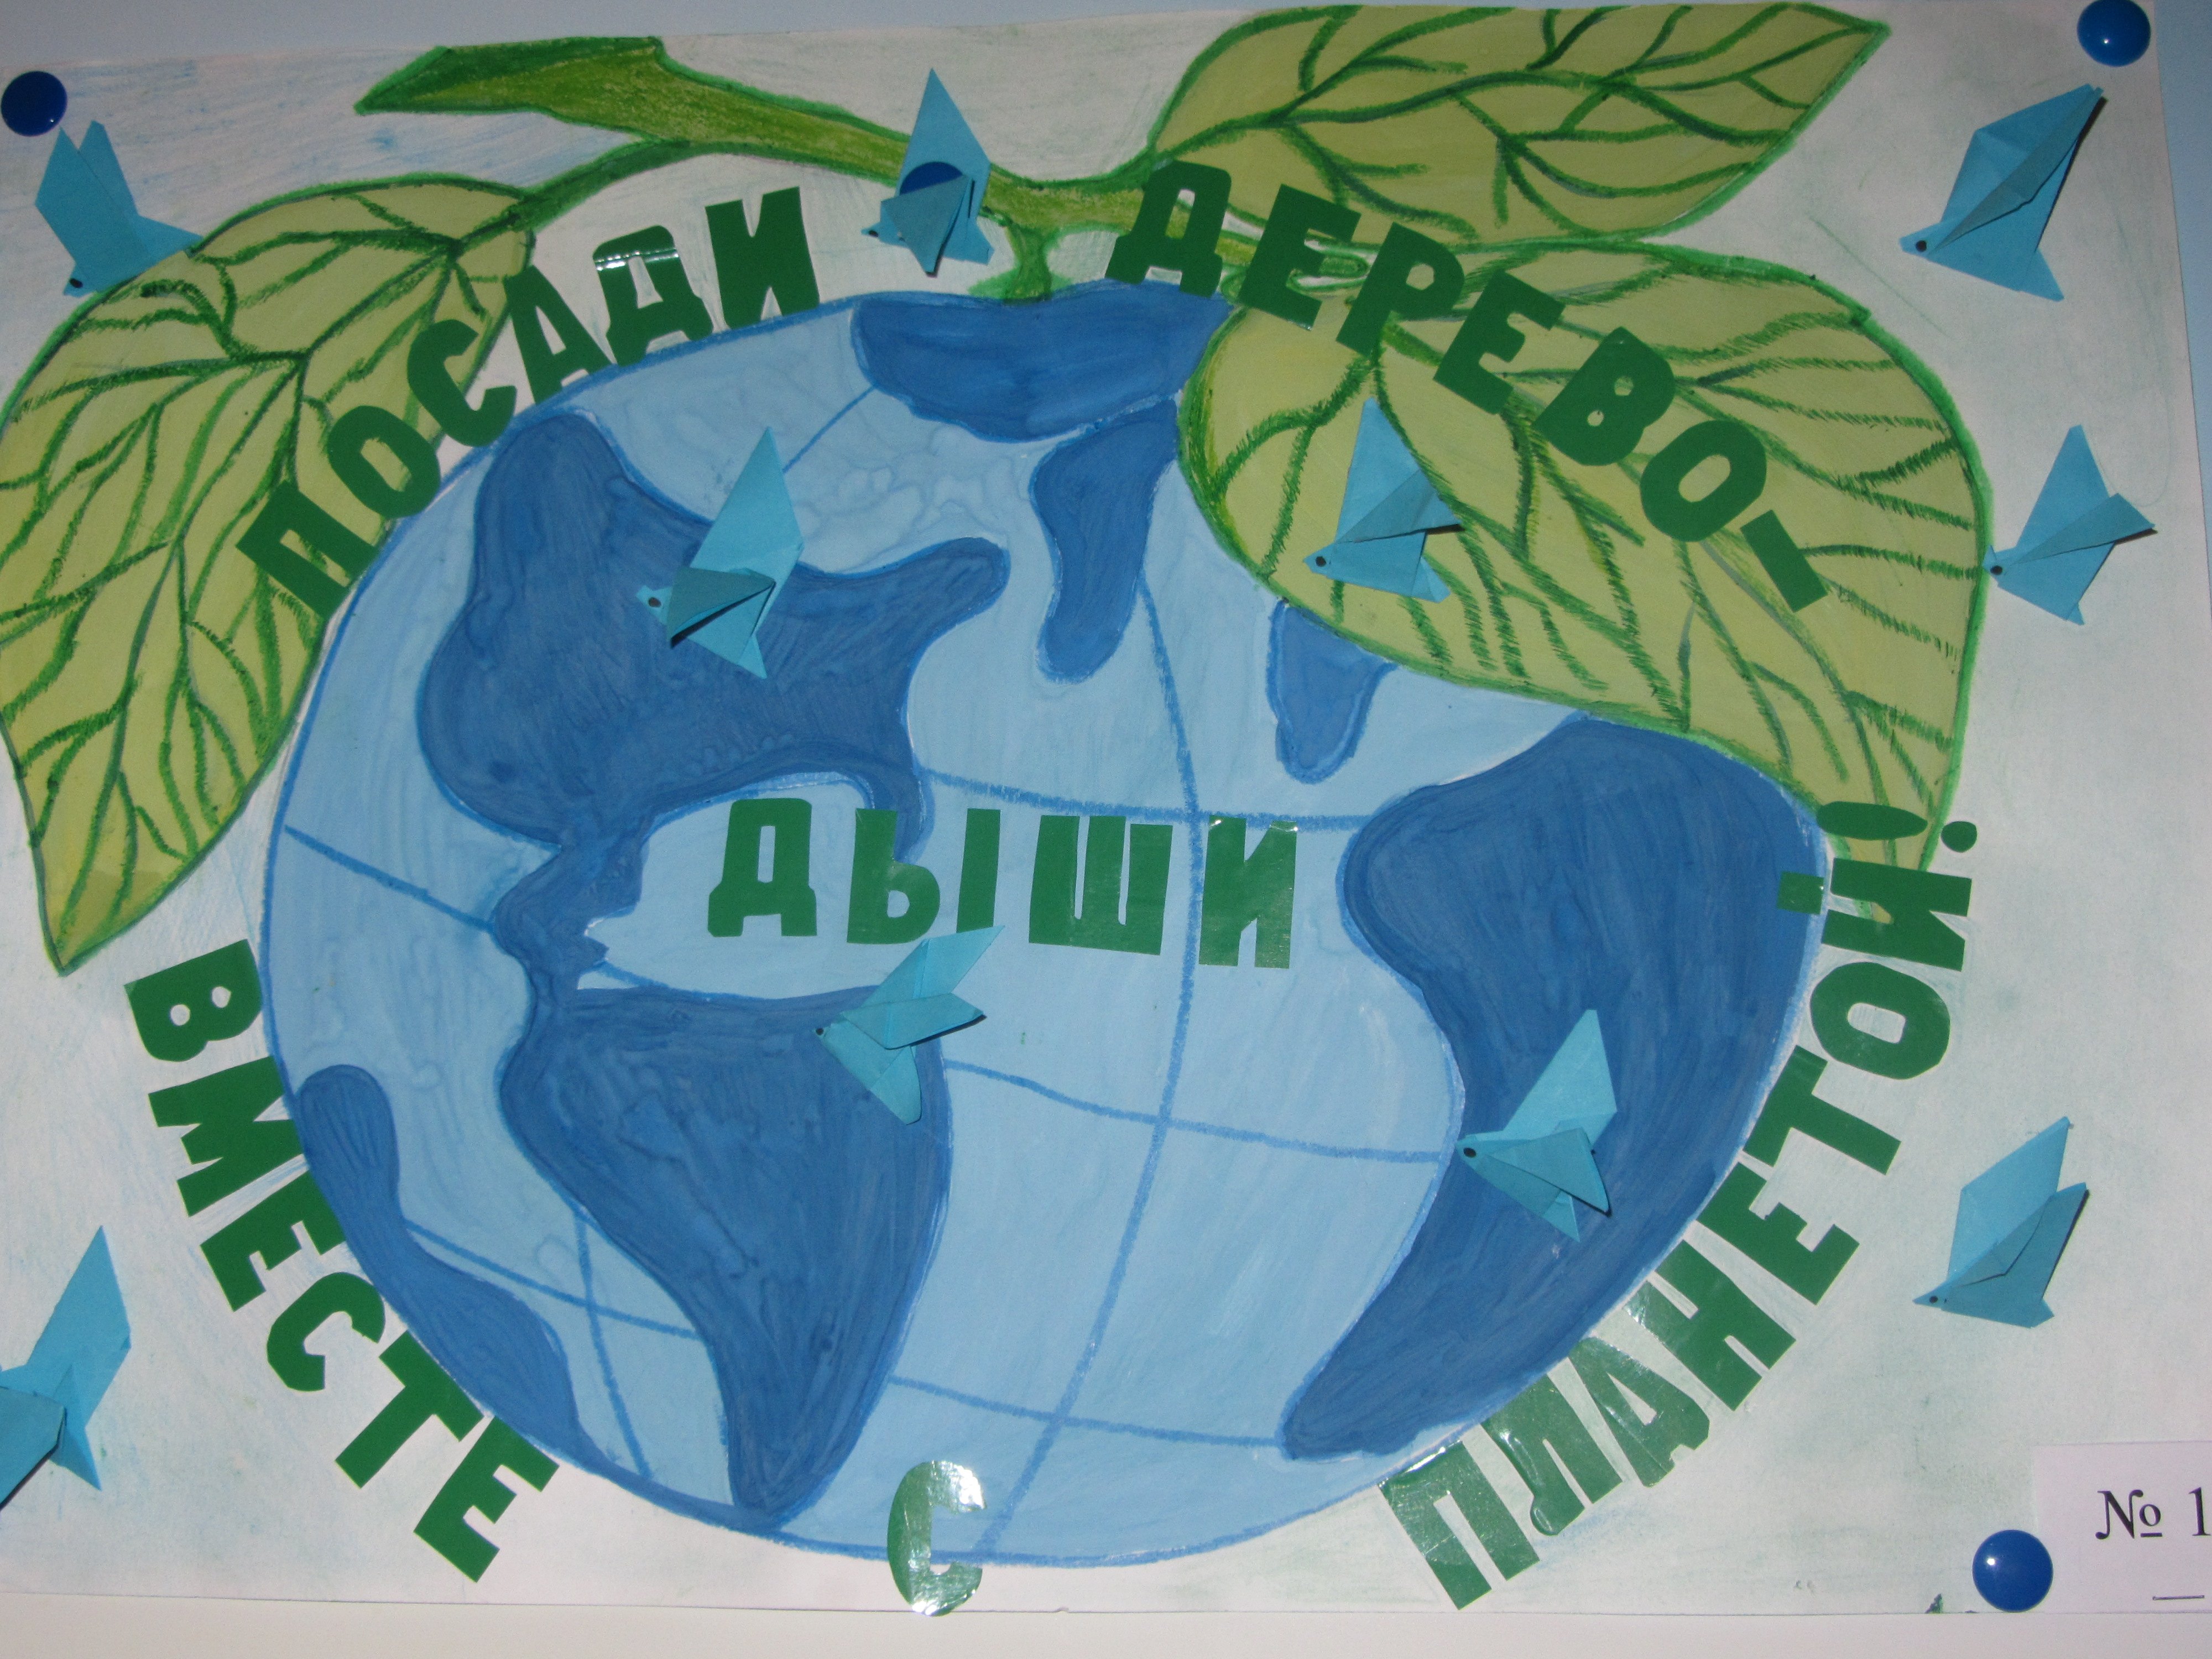 Плакат ко дню земли. Экологический плакат. Плакат на экологическую тему. Рисунок на экологическую тему. День земли рисунок.